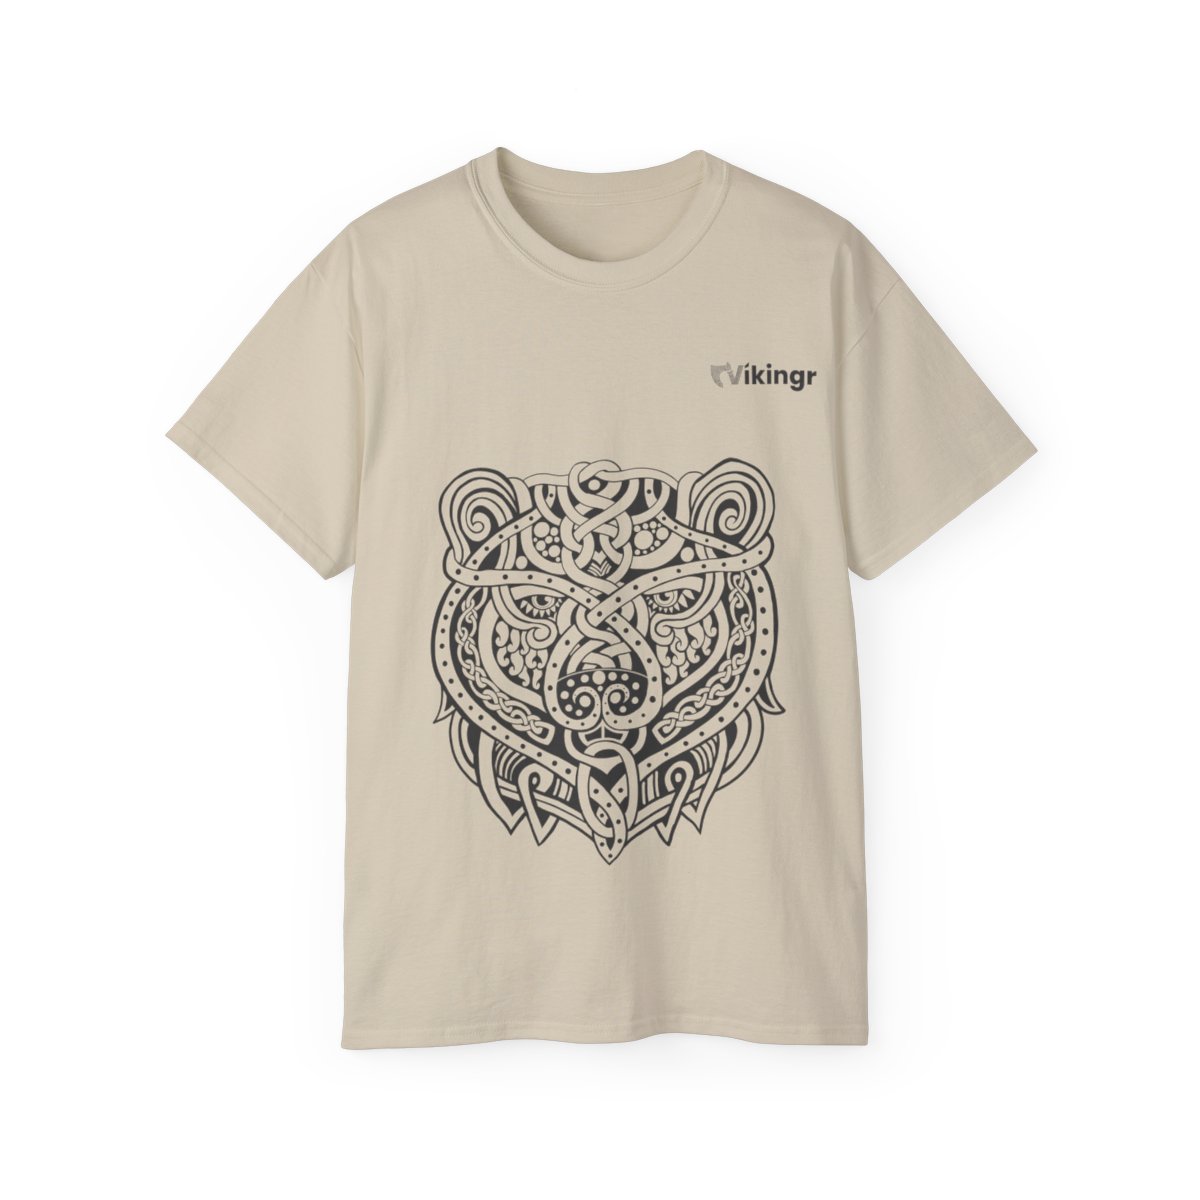 “Bear Within” – Berserkr – Dark Artwork T-Shirt